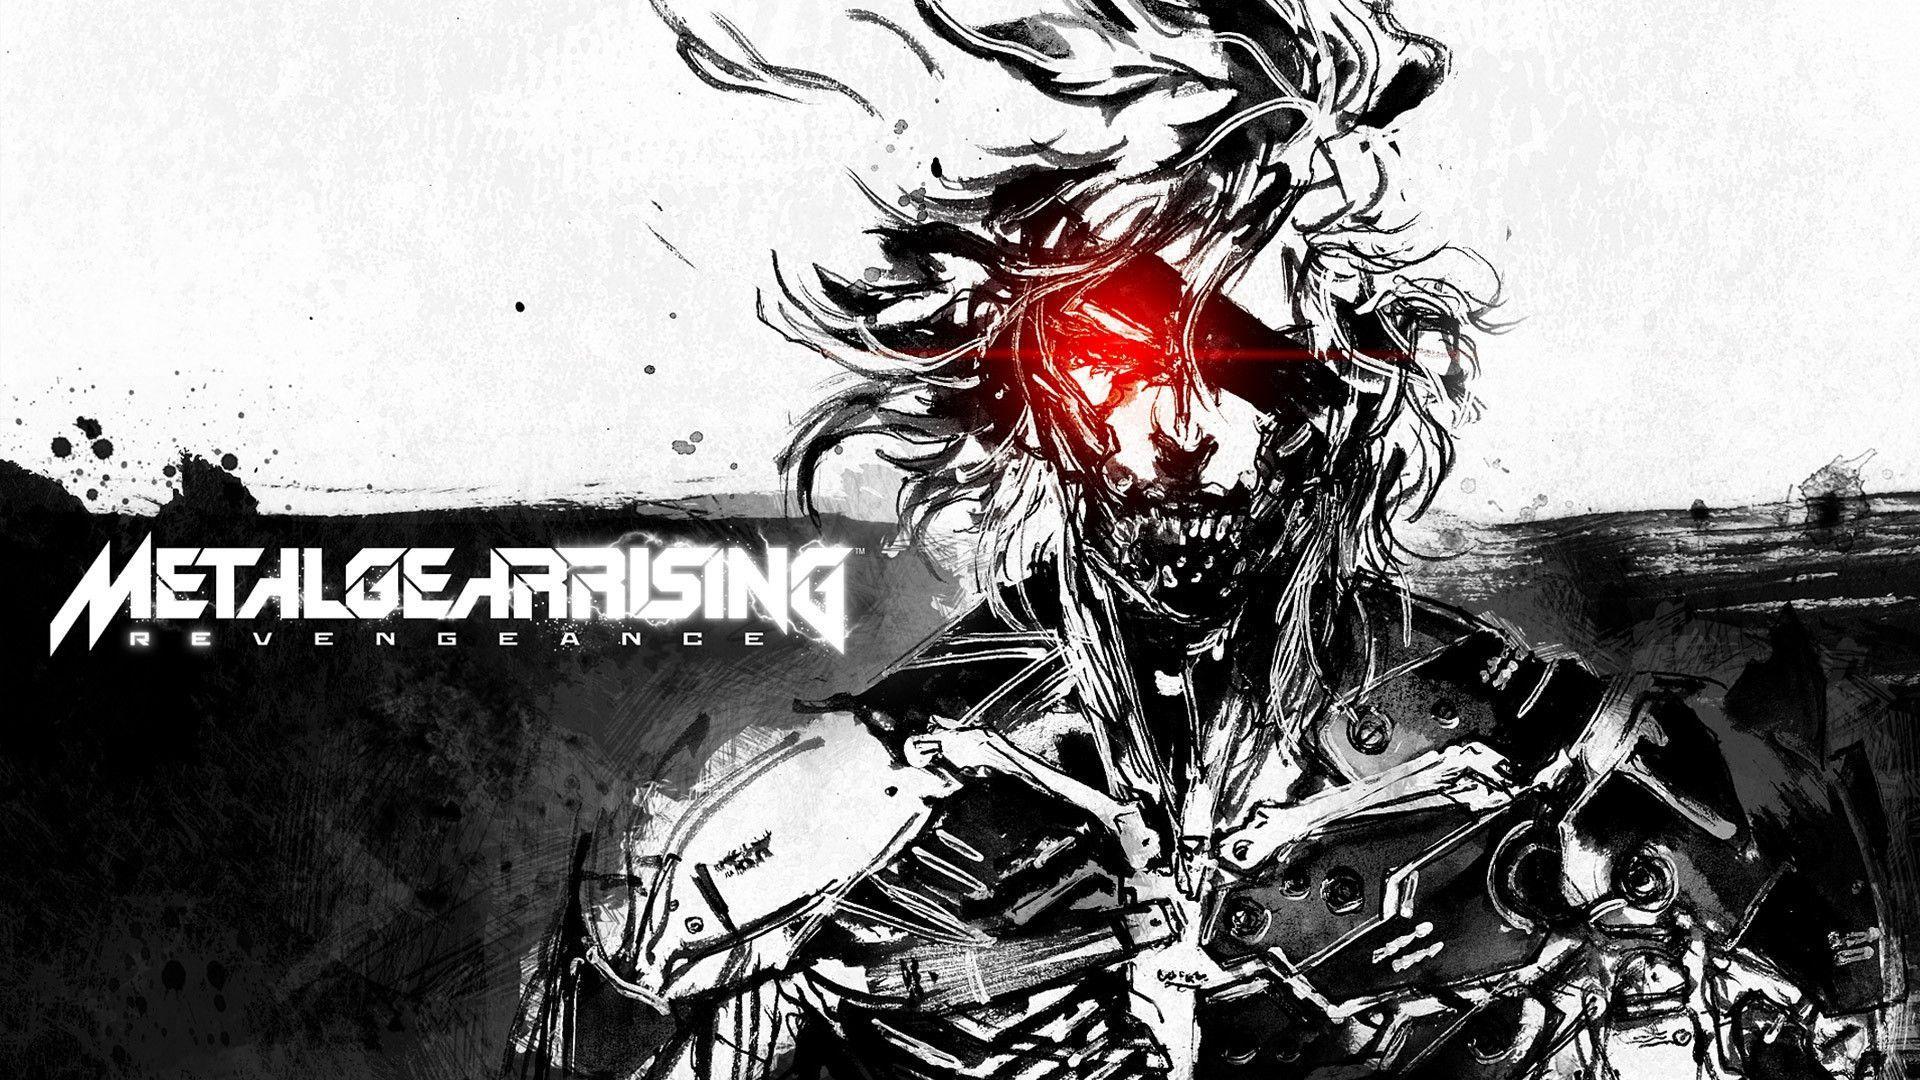 Metal Gear Rising: Revengeance Wallpaper. Metal Gear Rising